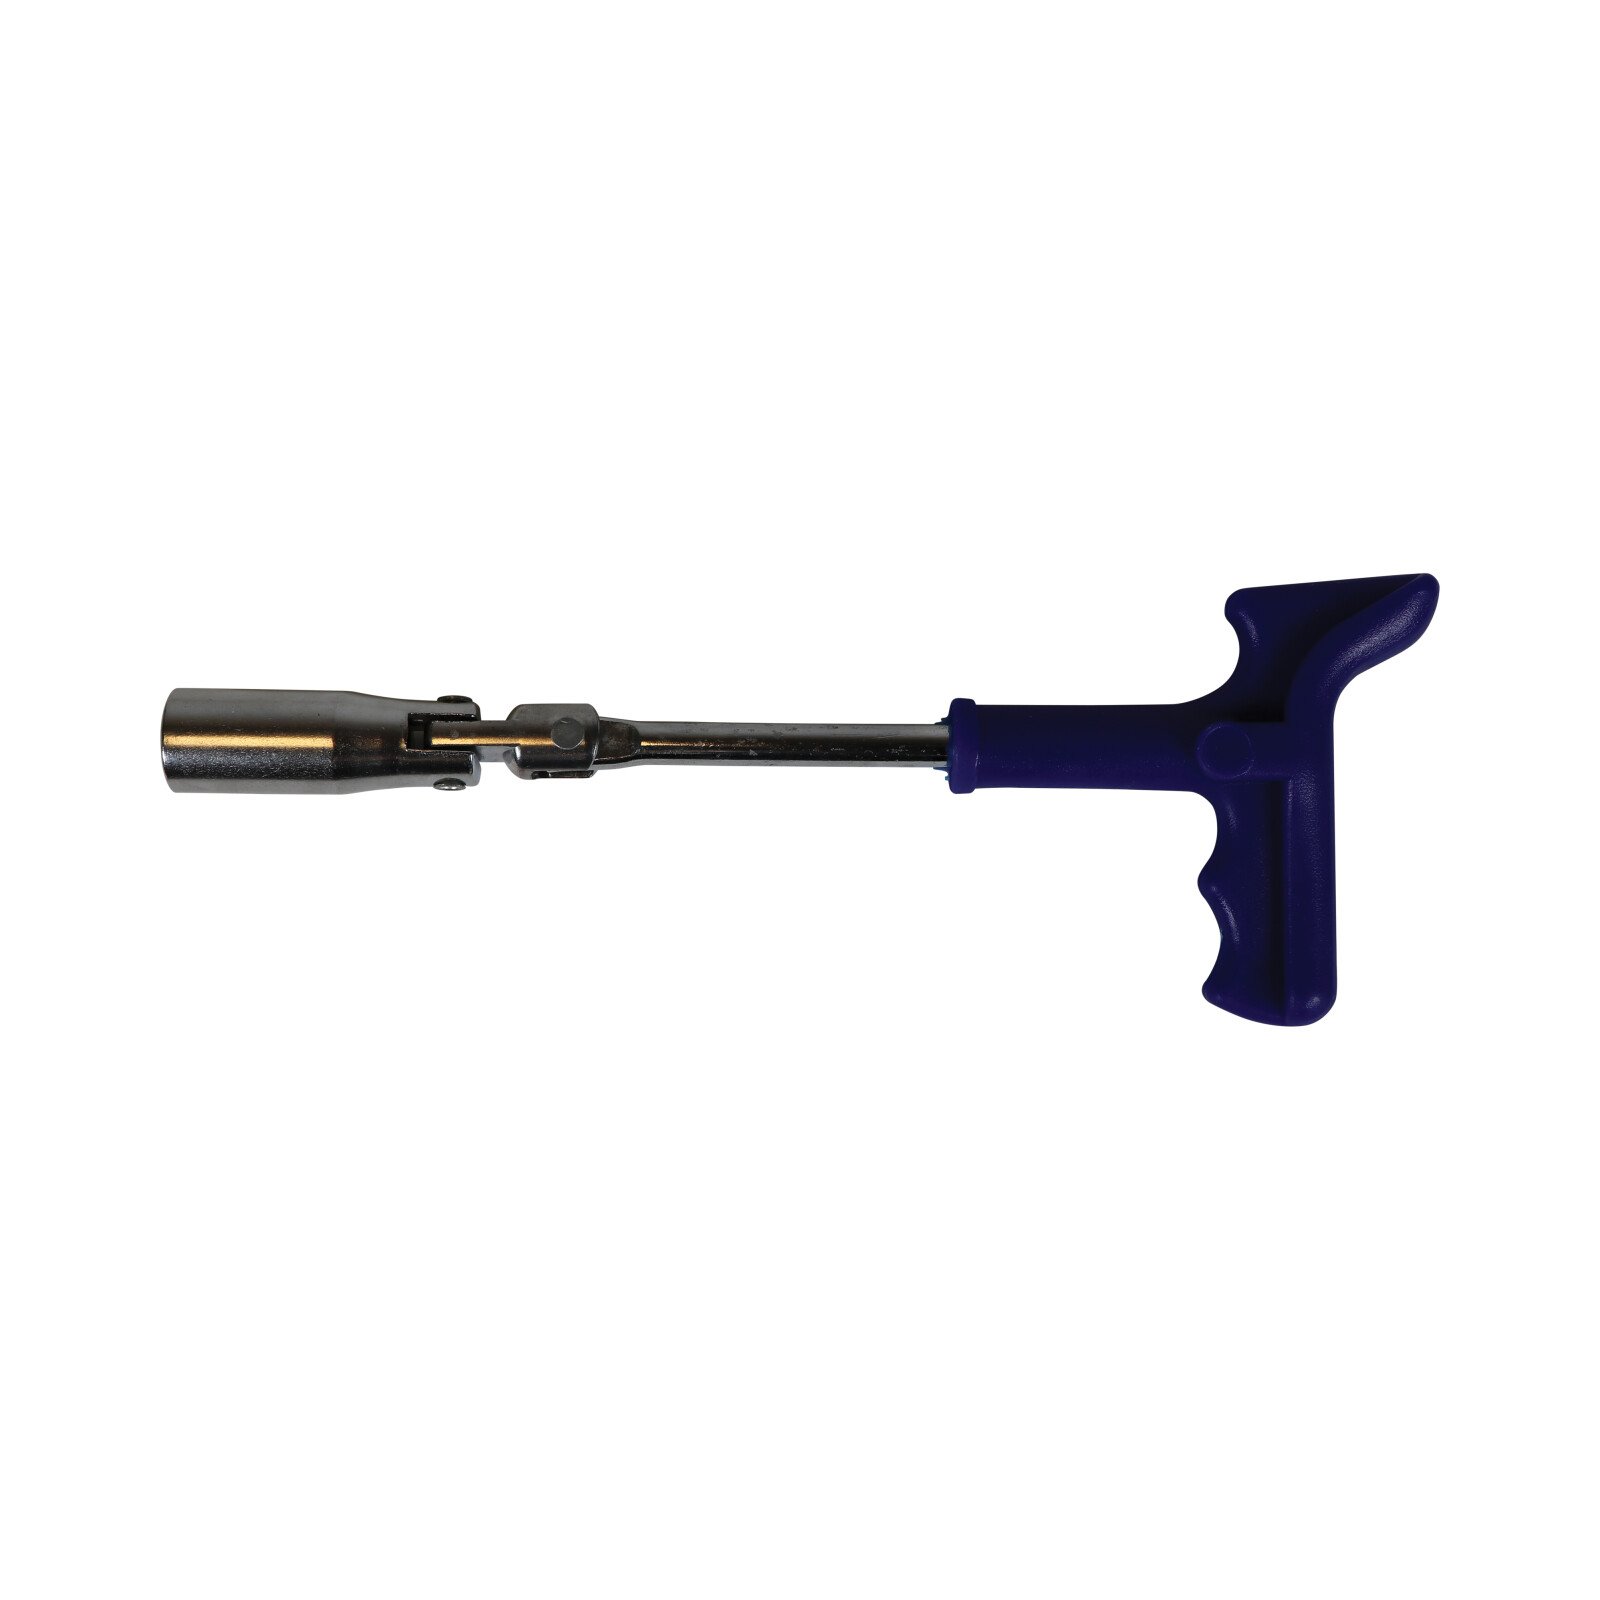 Carpoint, T-modell spanner for spark plug - 21 mm thumb